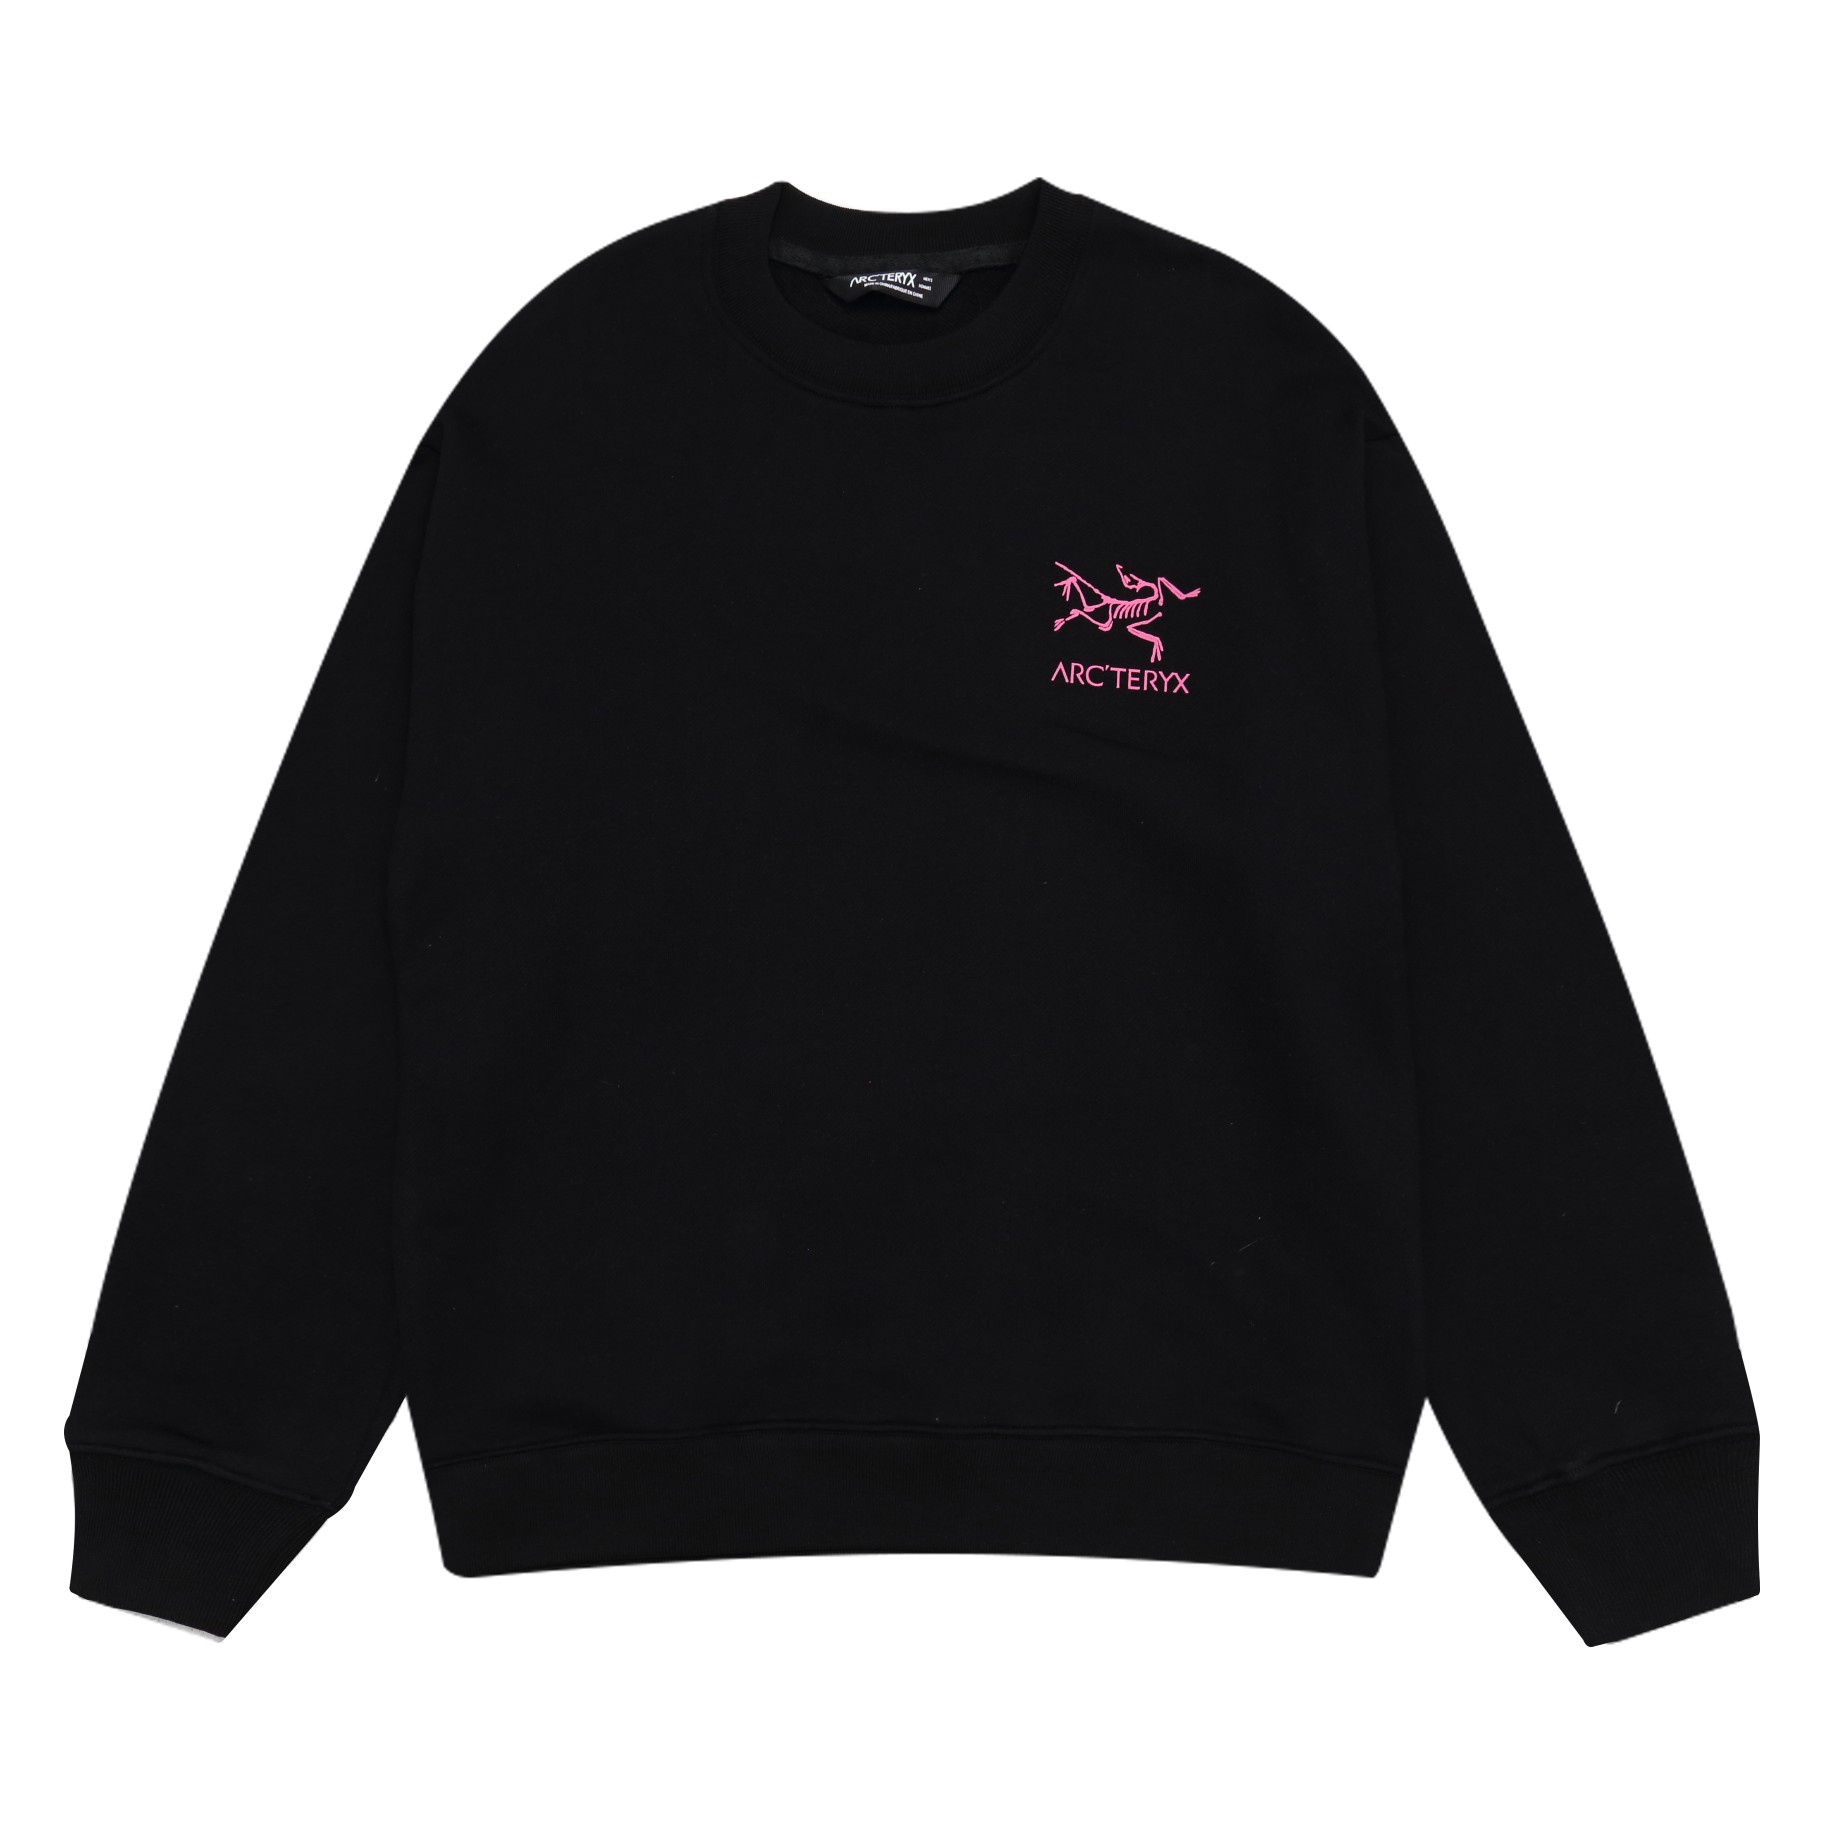 Arc’teryx Clothing Sweatshirts Black White Printing Cotton